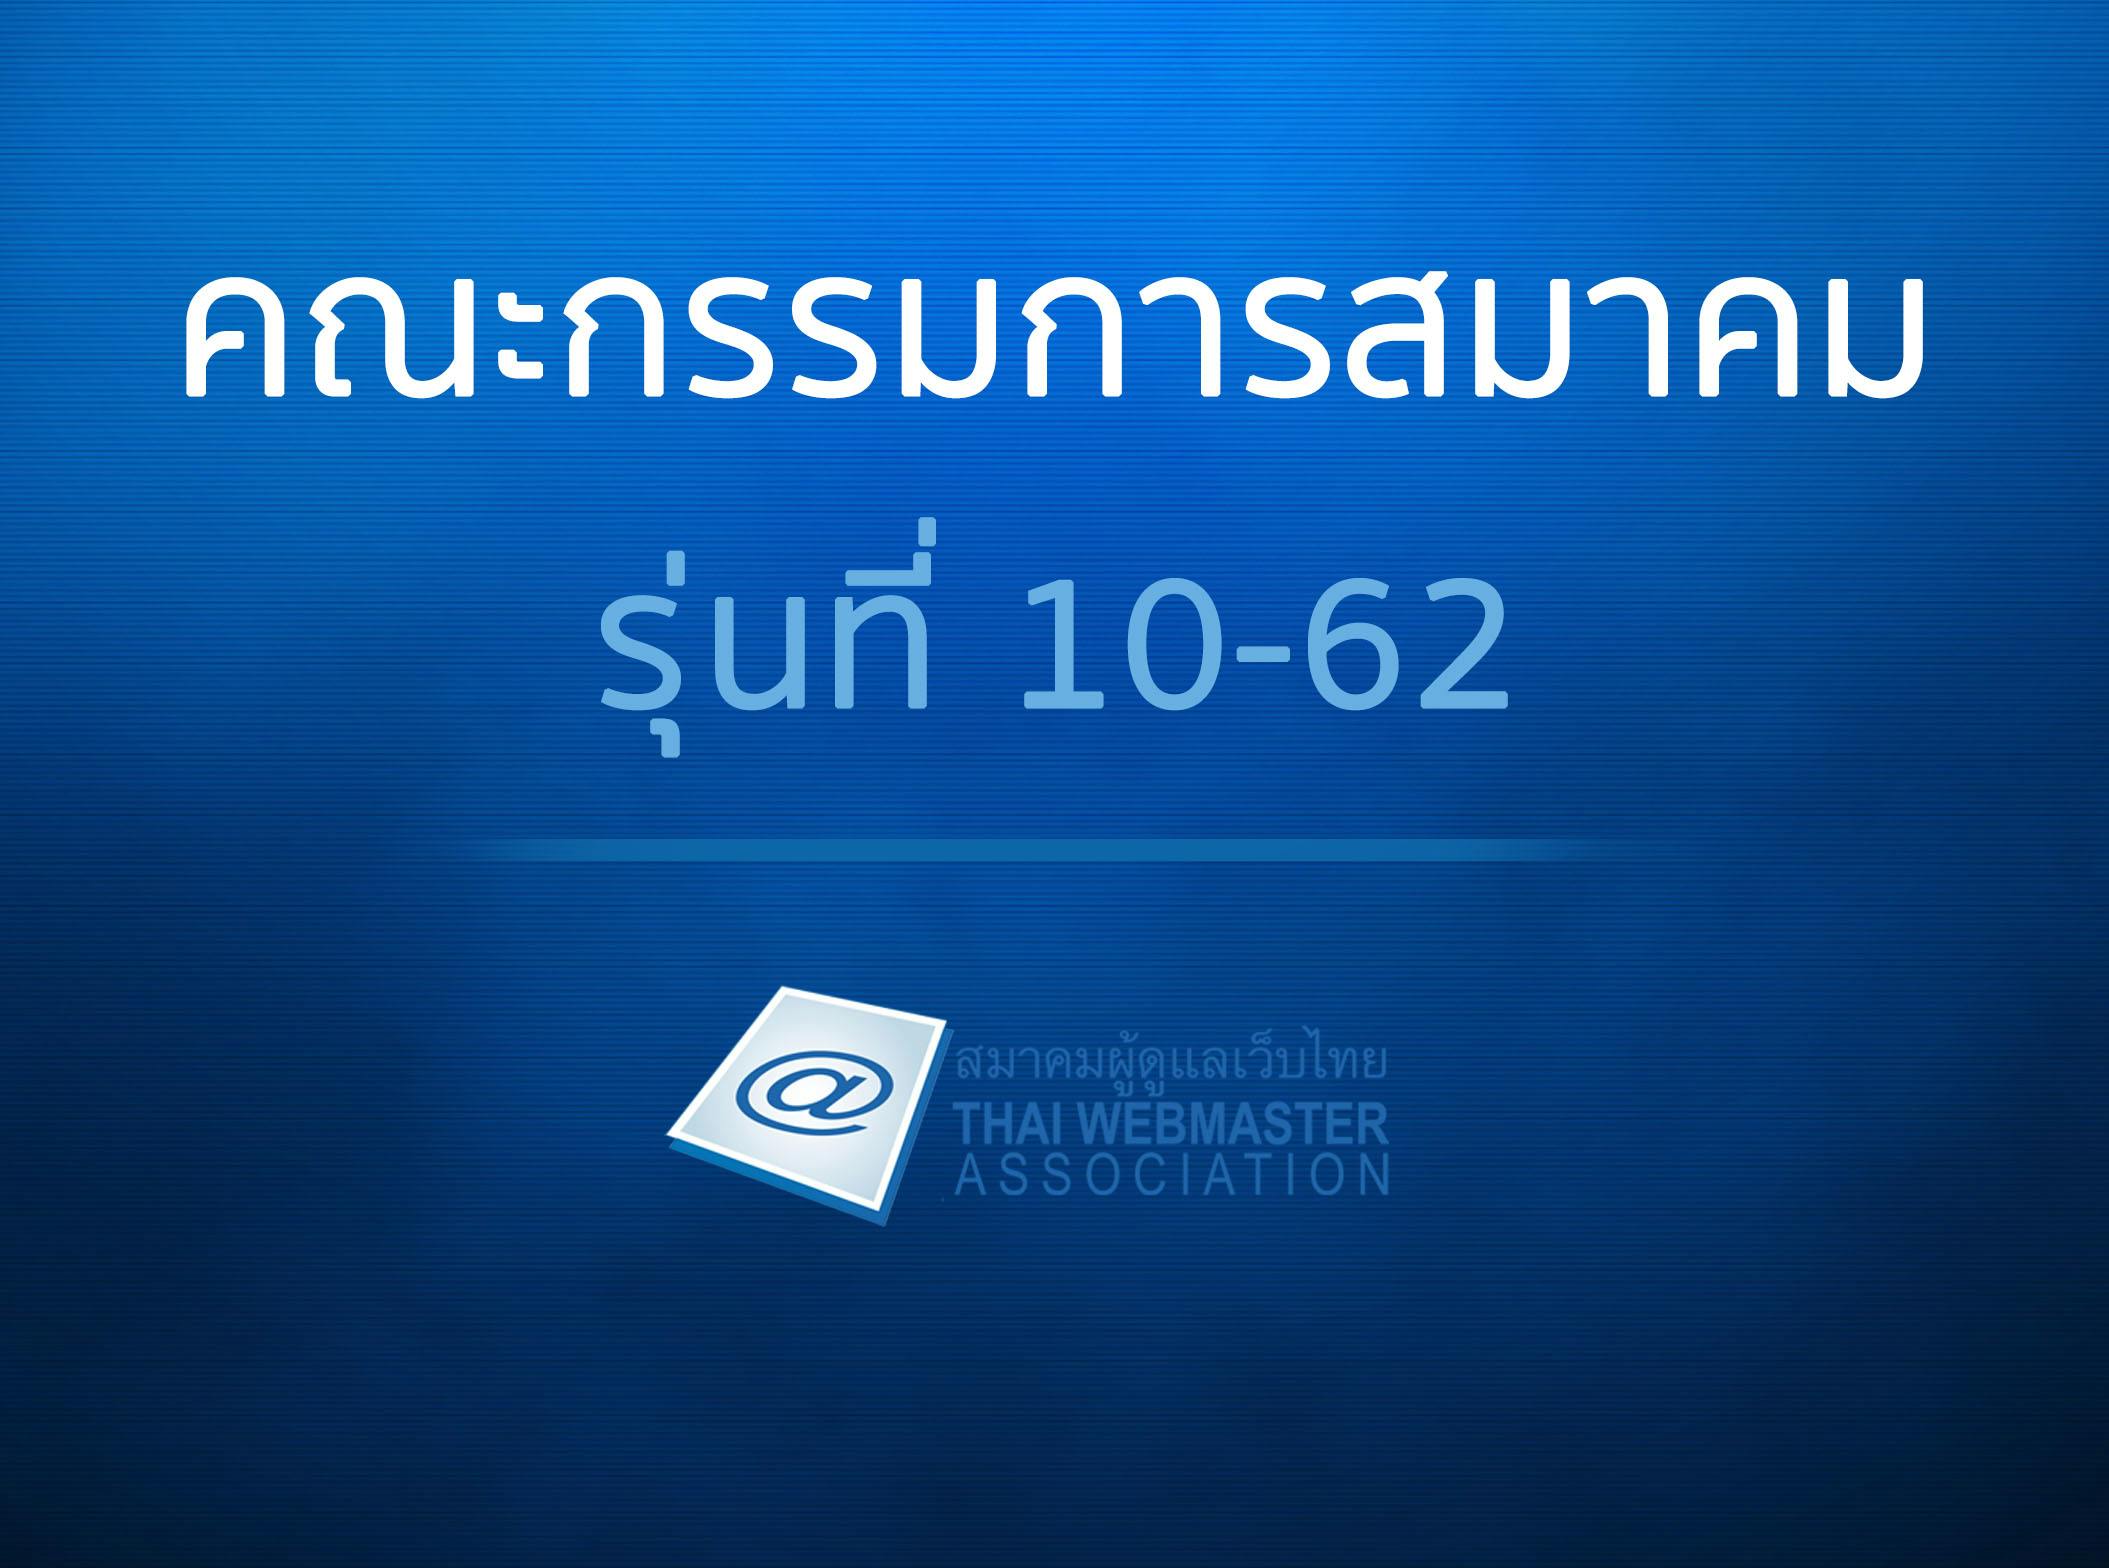 Cover Image for รายชื่อกรรมการบริหารสมาคมผู้ดูแลเว็บไทย สมัยที่ 10/2562-2564